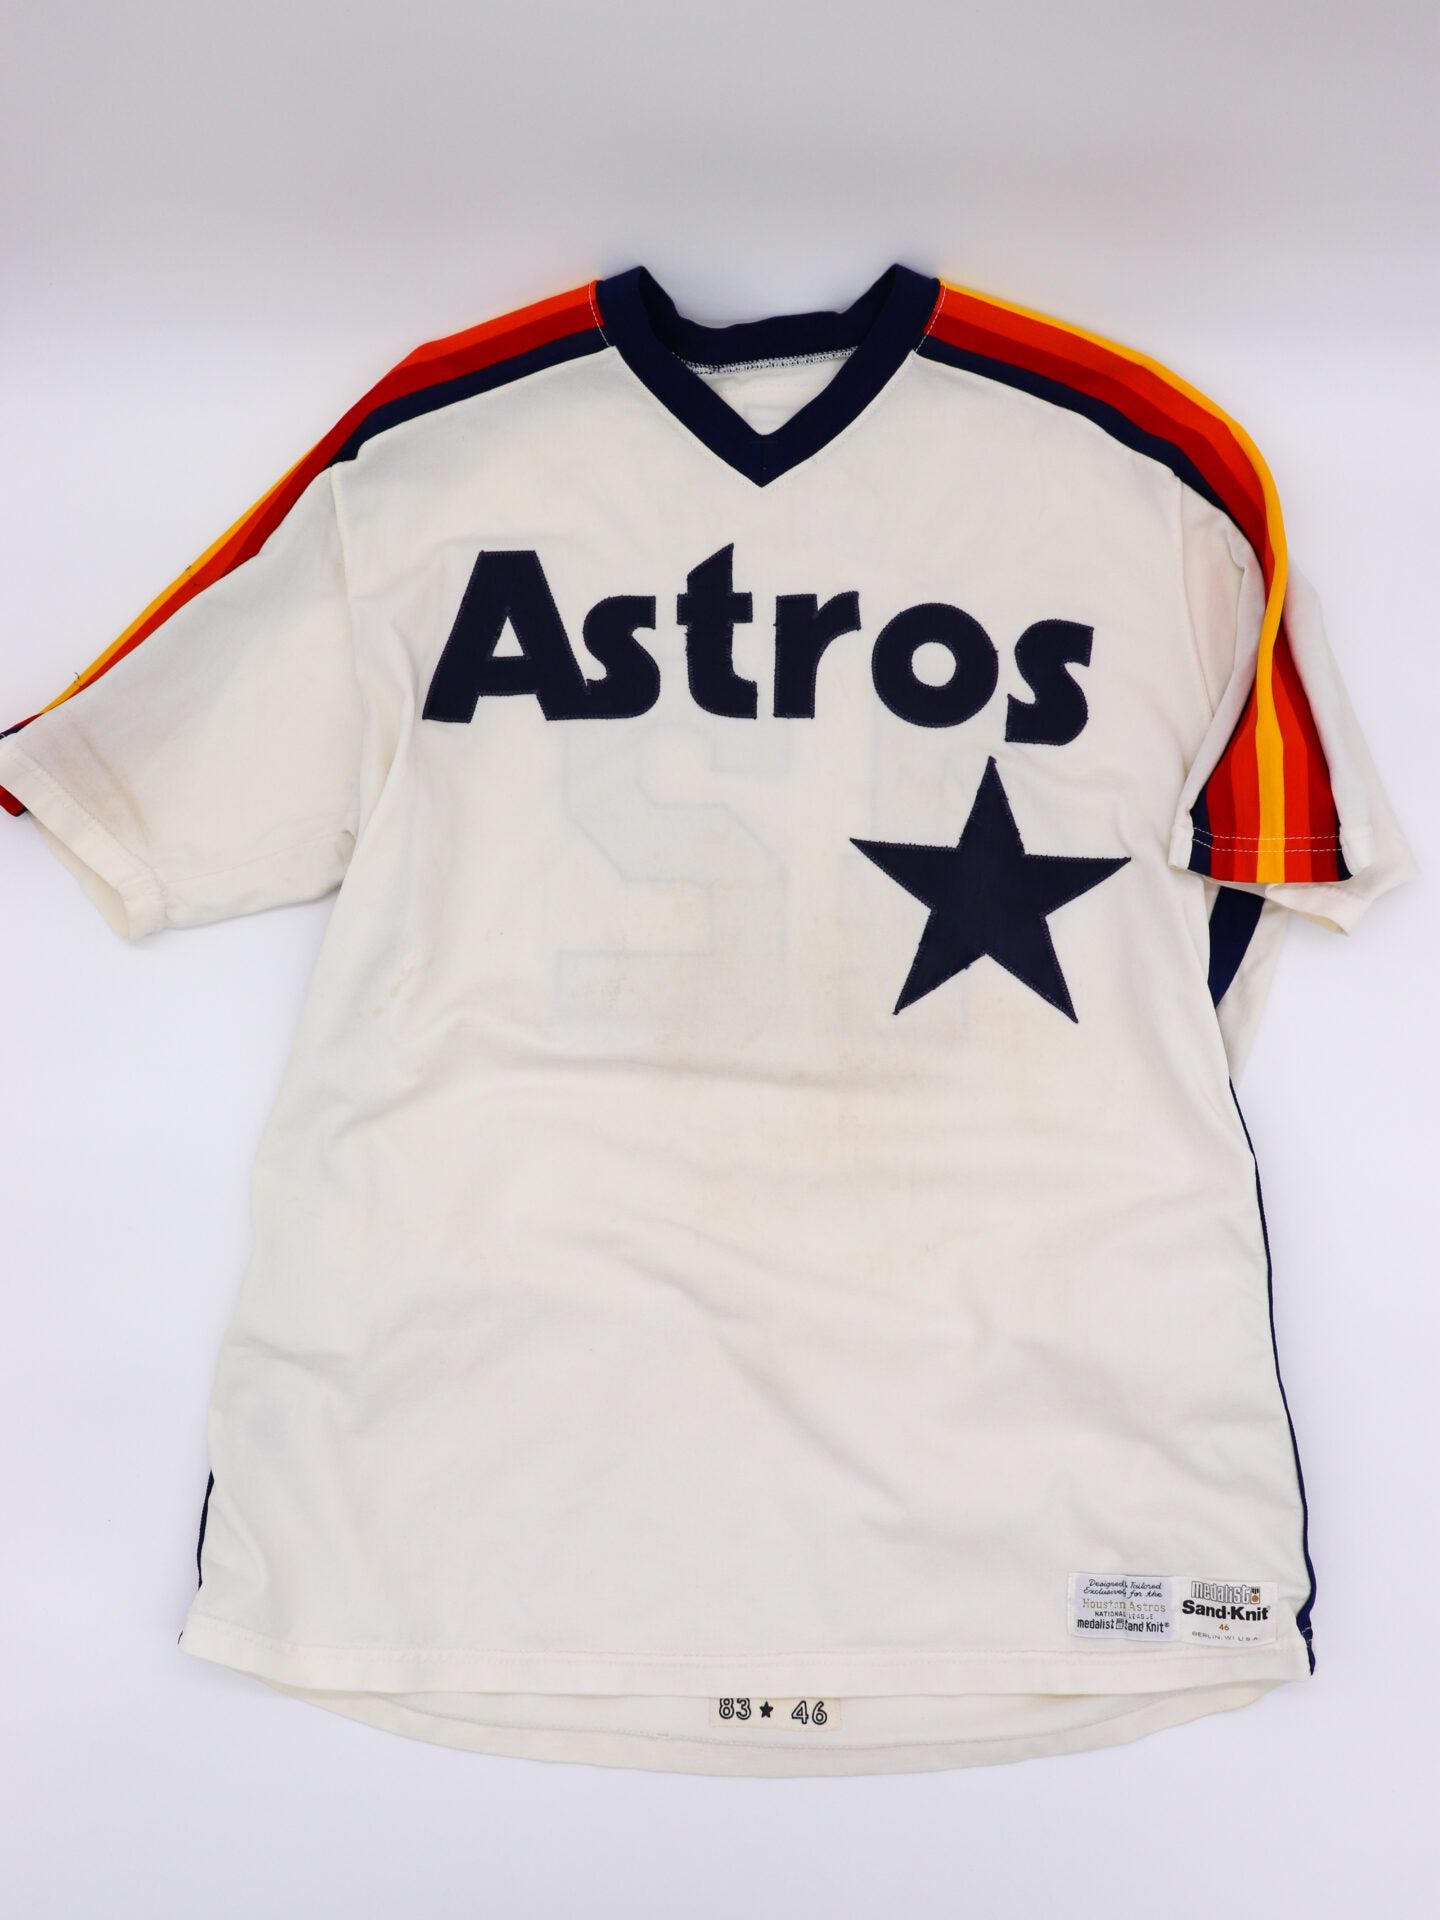 Houston Astros Throwback Jerseys, Astros Retro Uniforms